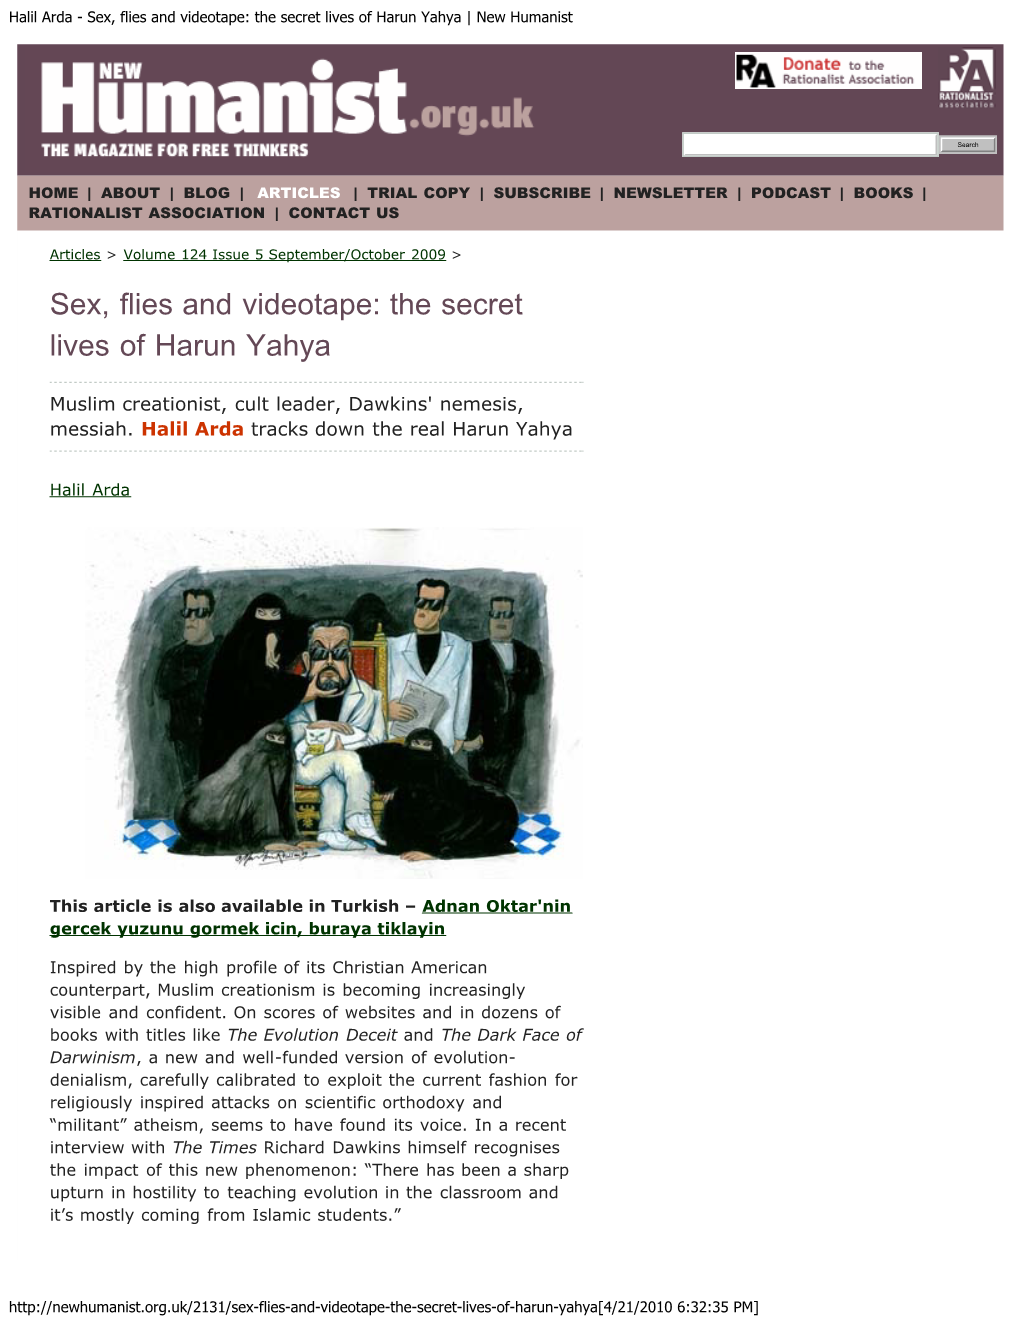 Halil Arda - Sex, Flies and Videotape: the Secret Lives of Harun Yahya | New Humanist